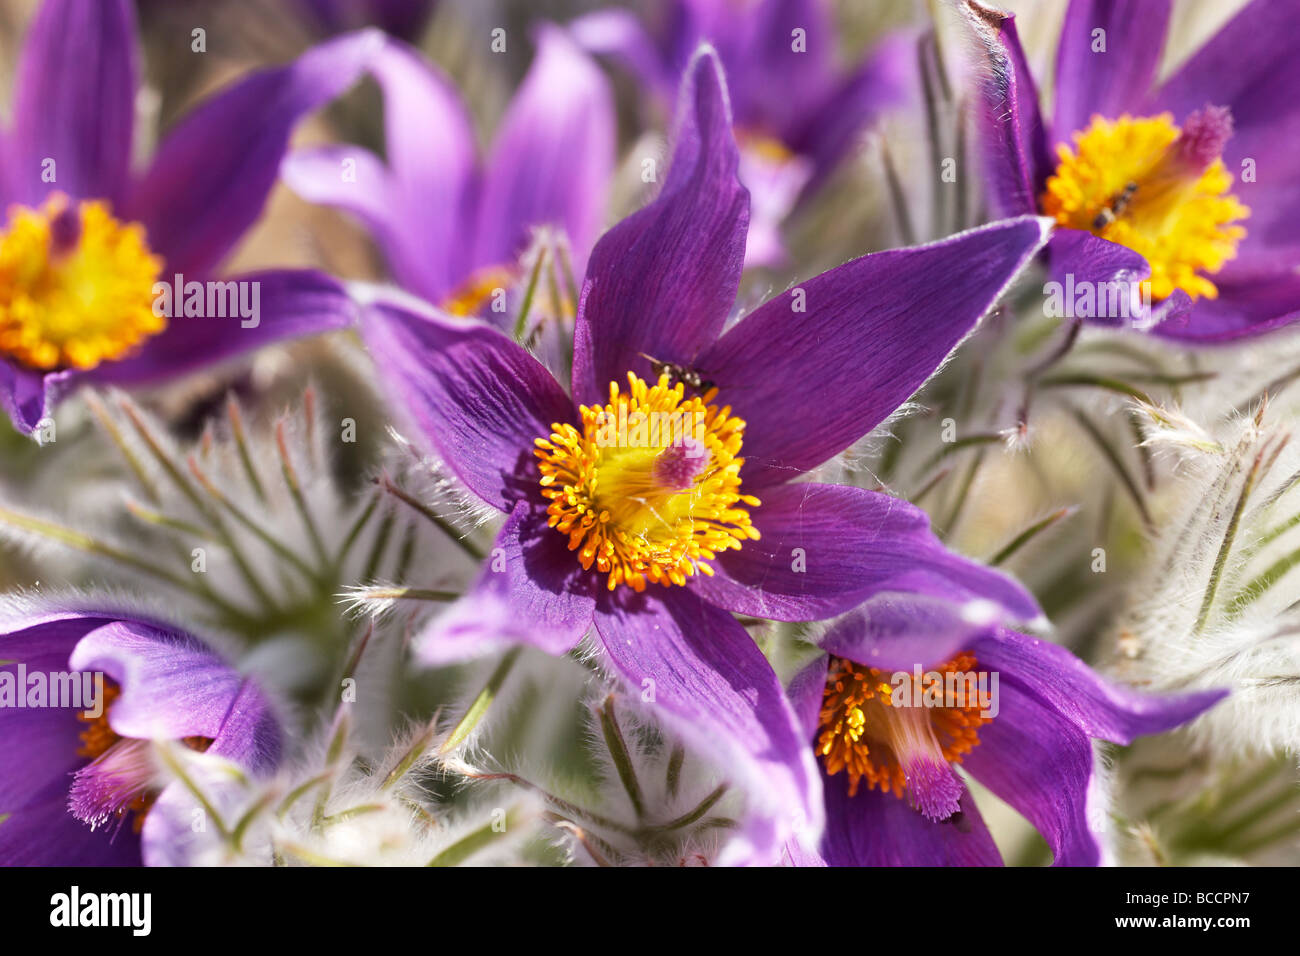 Pasque flower (Pulsatilla patens) Stock Photo